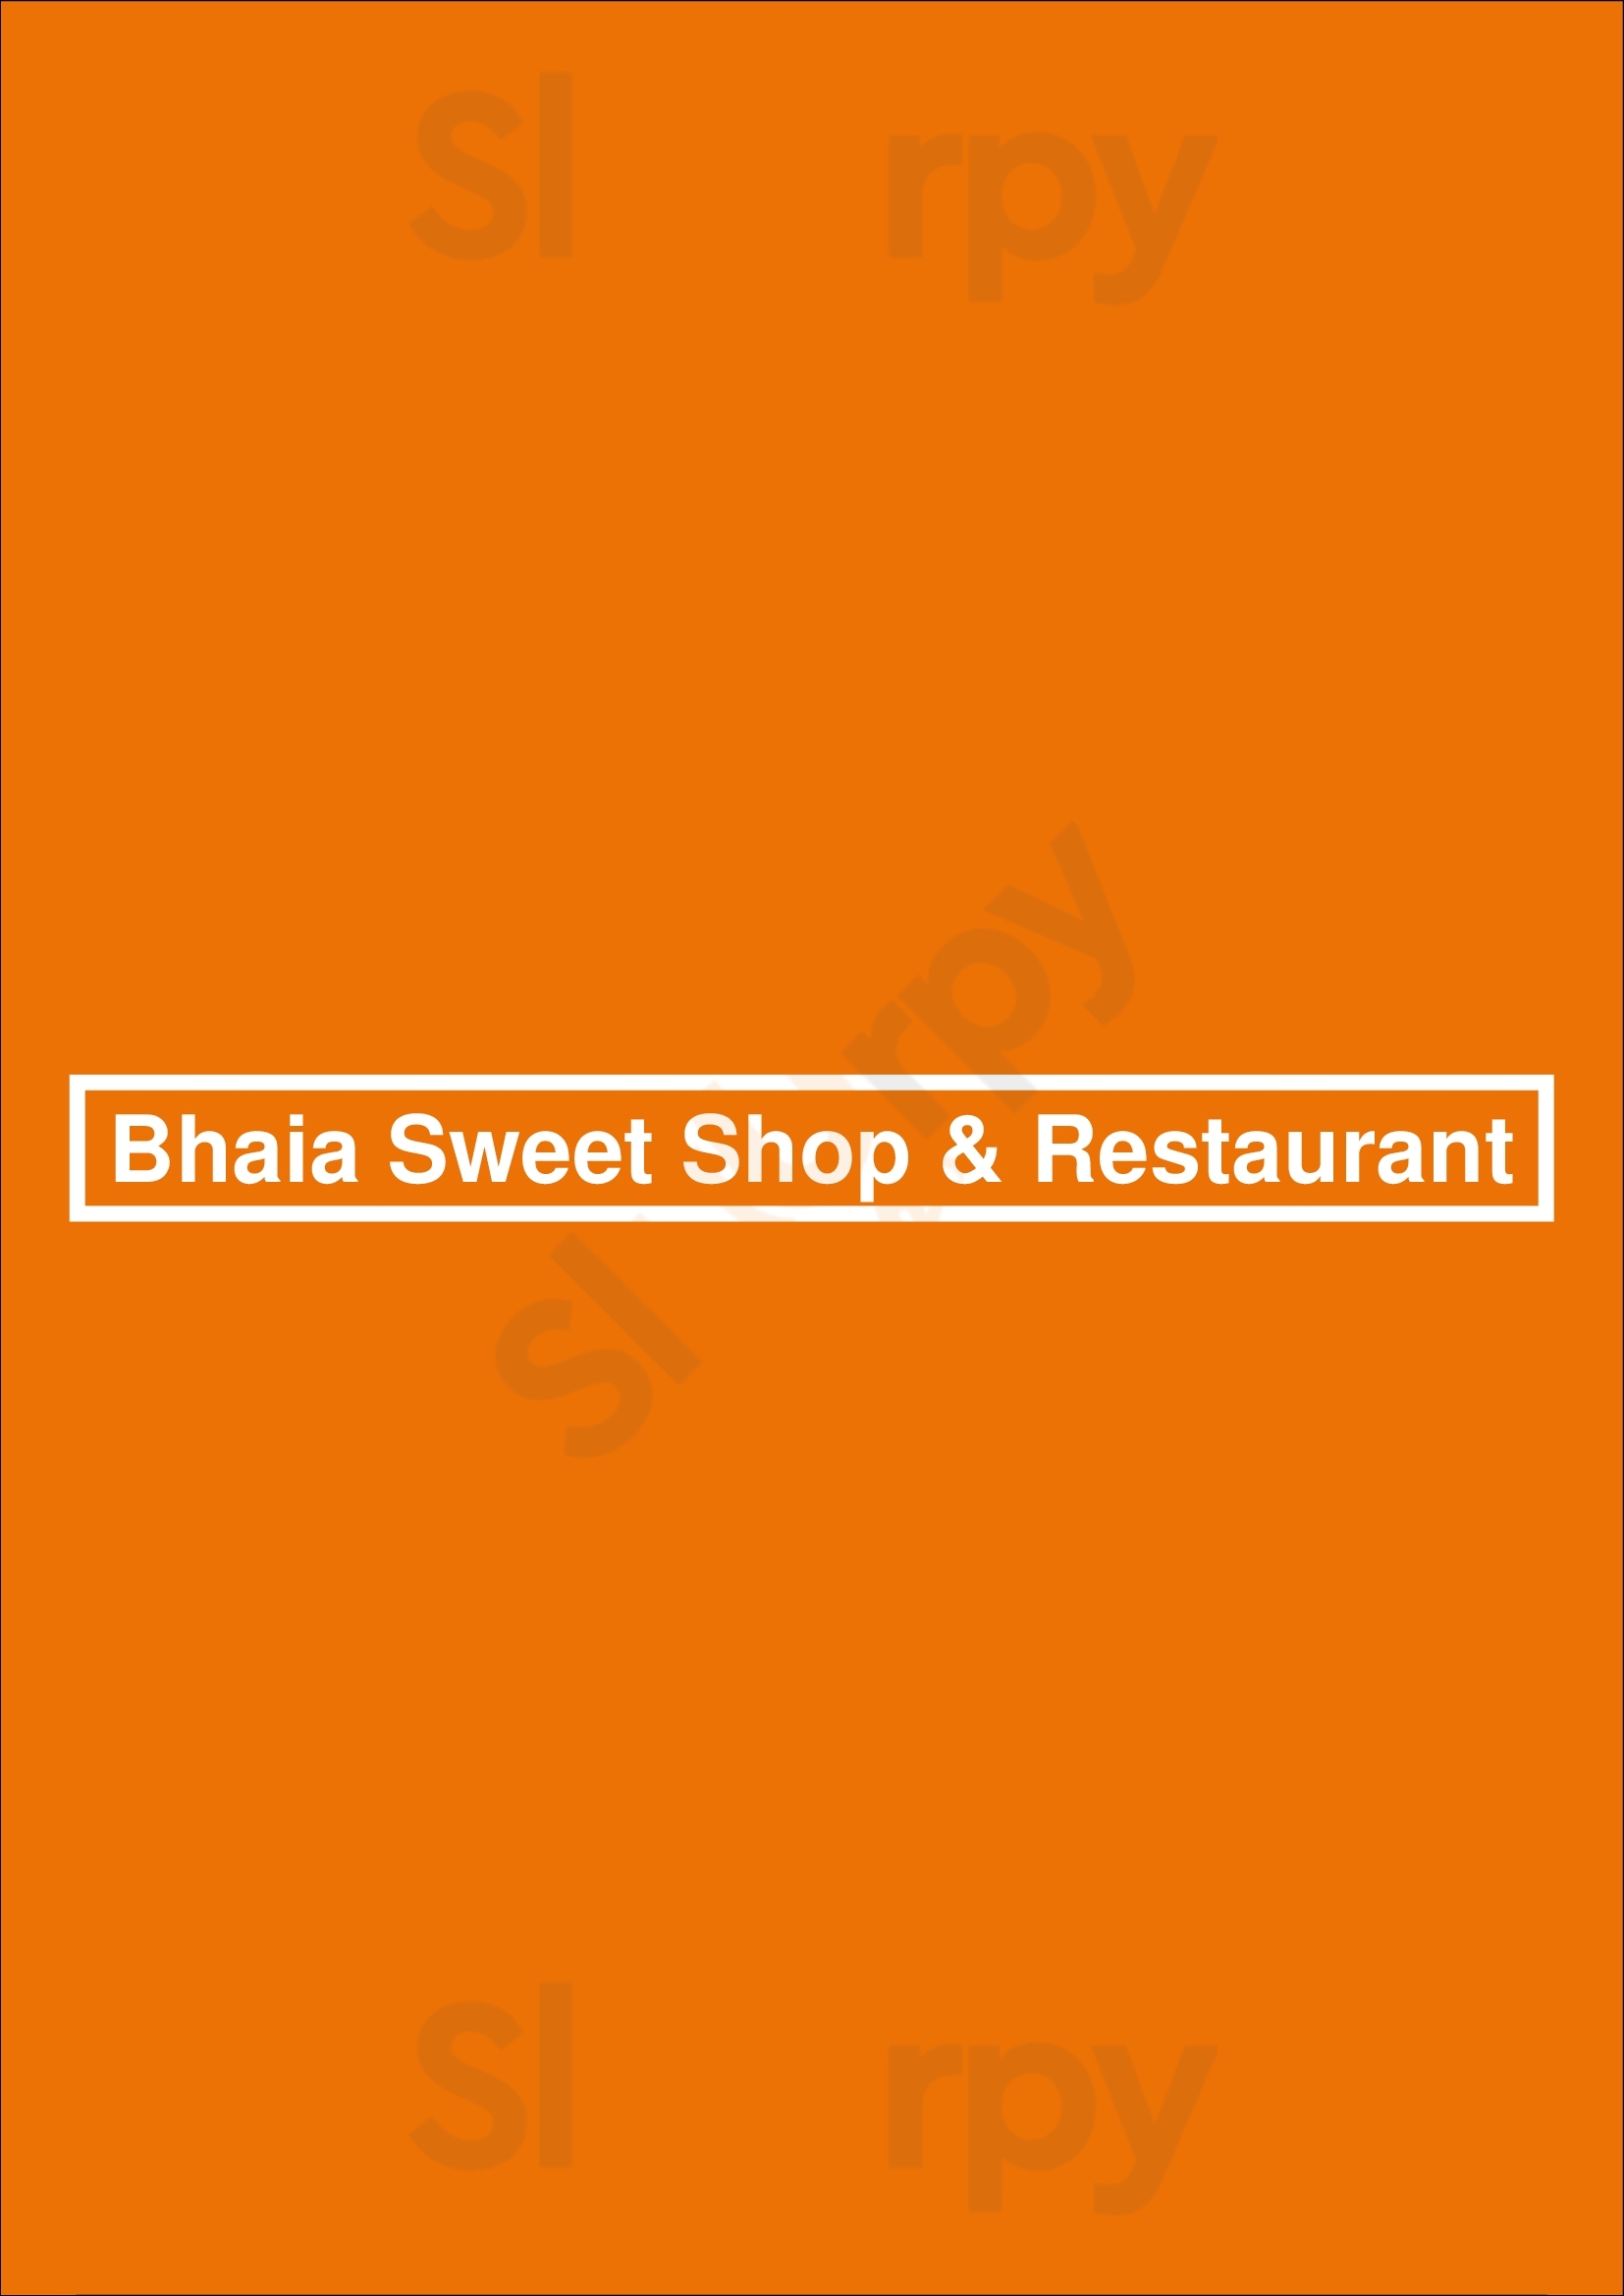 Bhaia Sweet Shop & Restaurant Surrey Menu - 1